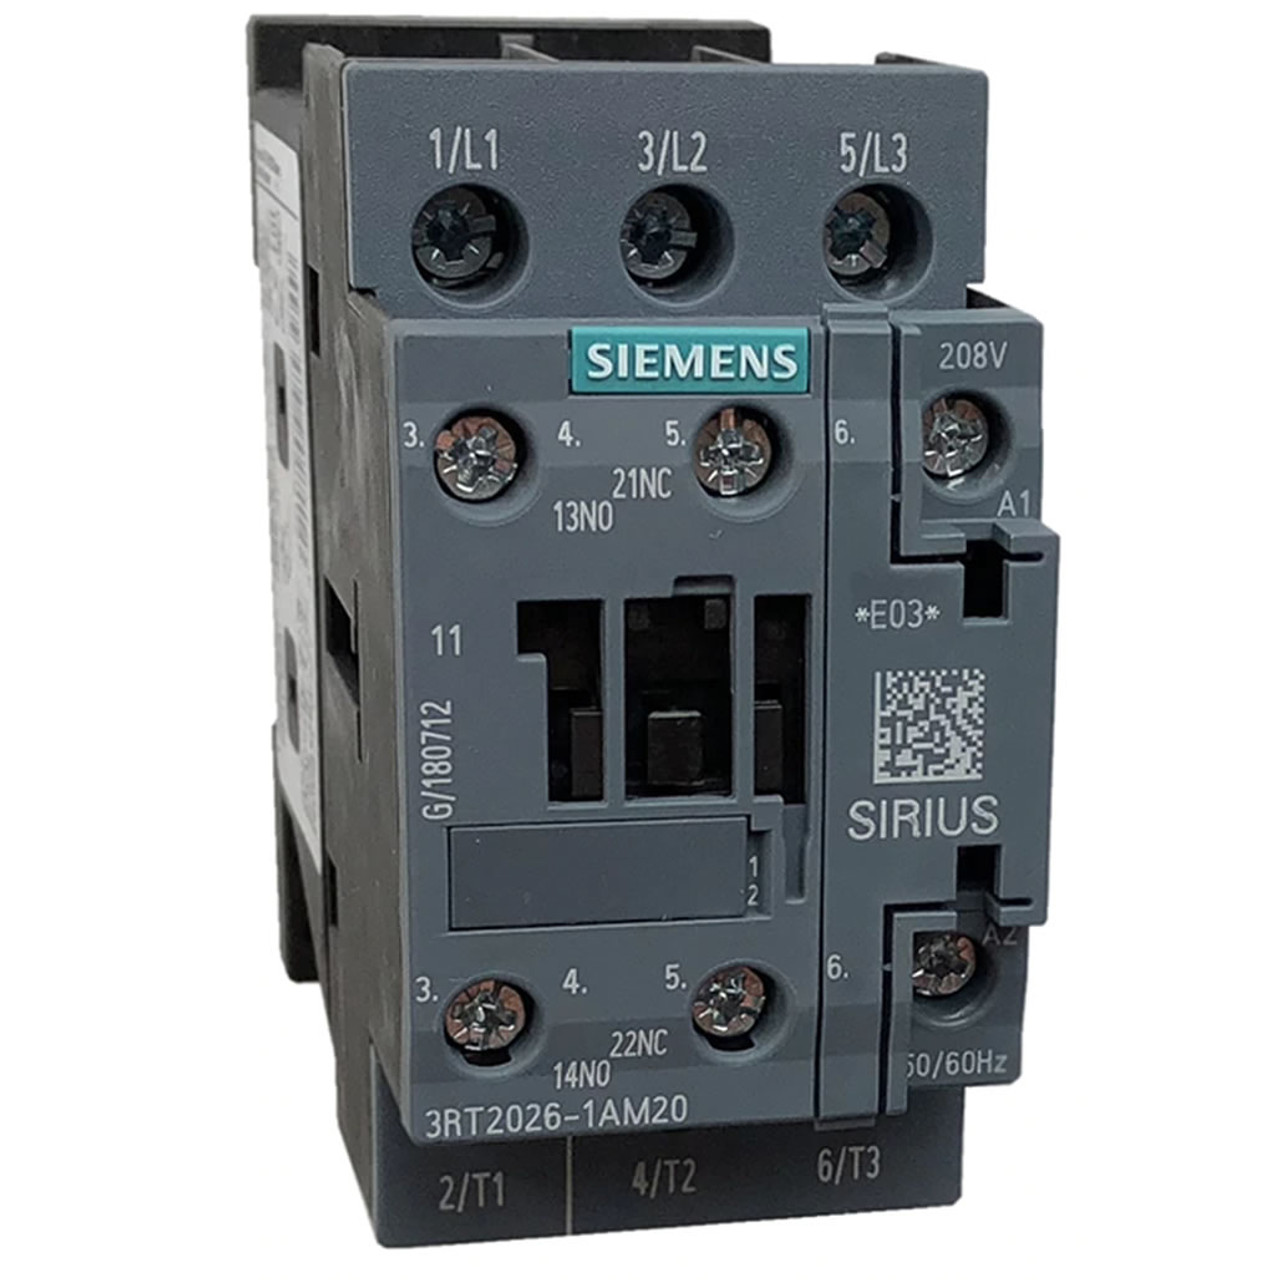 Siemens 3RT2026-1AM20 contactor